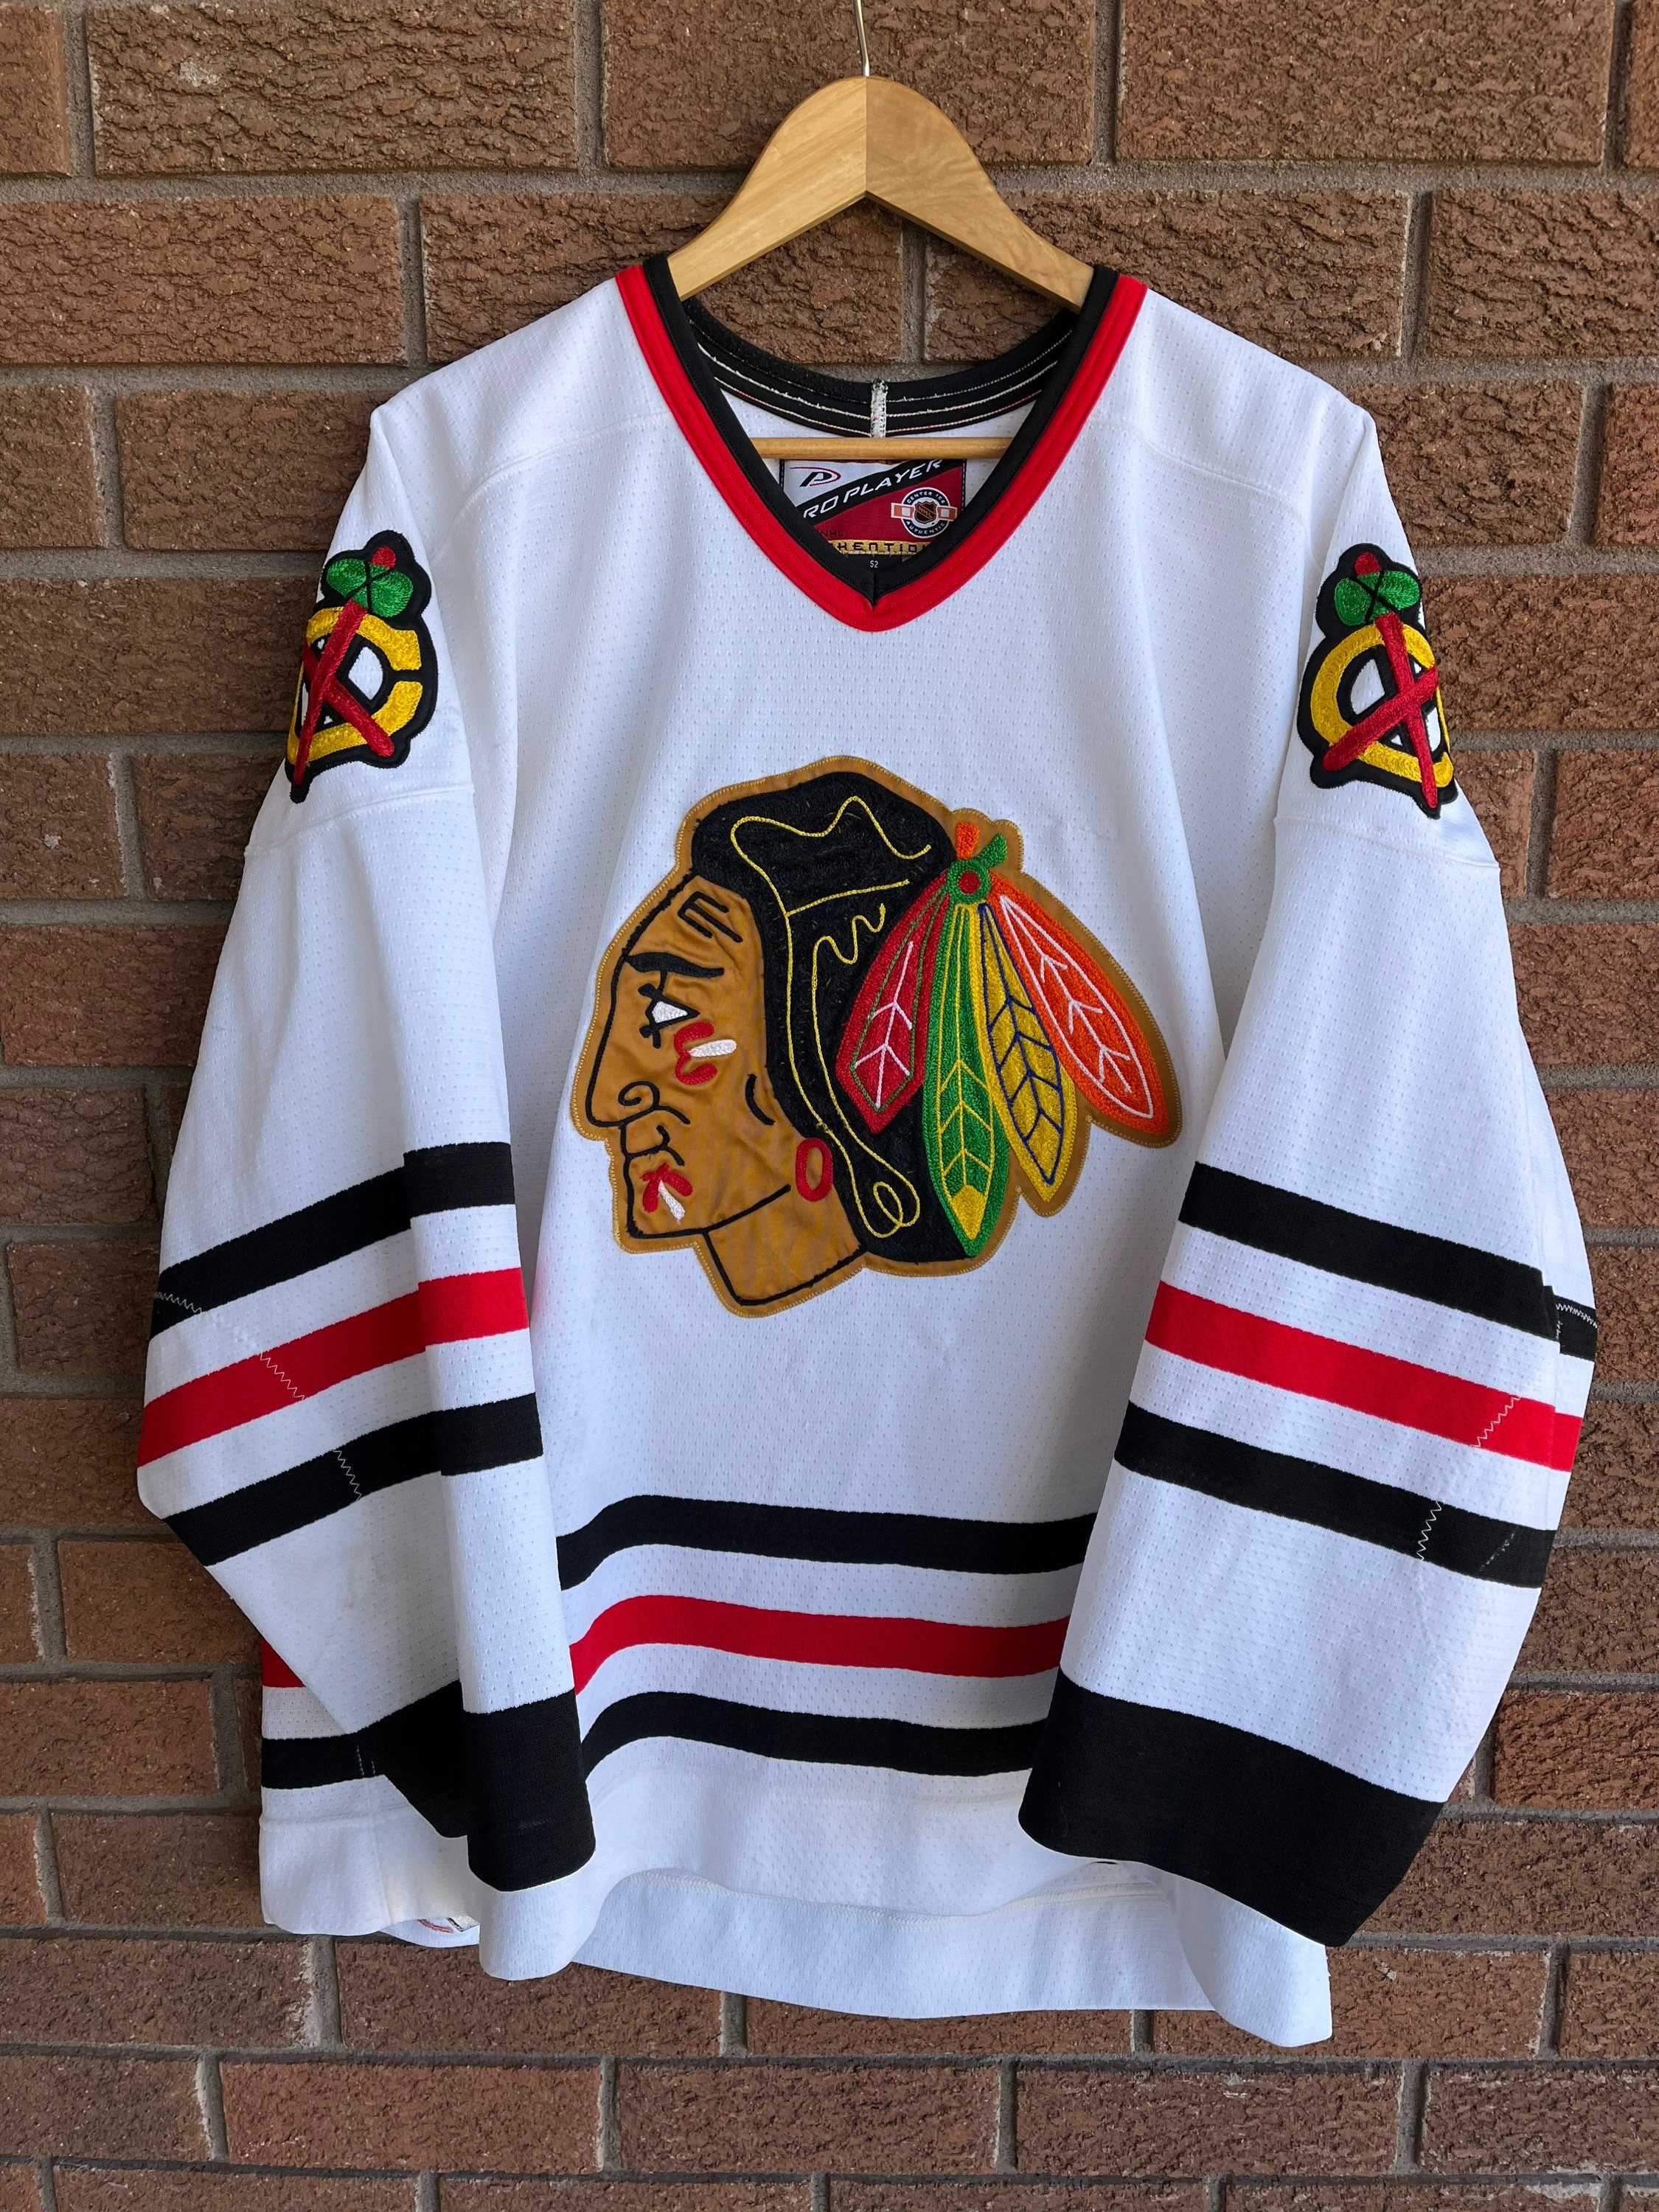 NHL Chicago Blackhawks Mix Jersey Custom Personalized Hoodie T